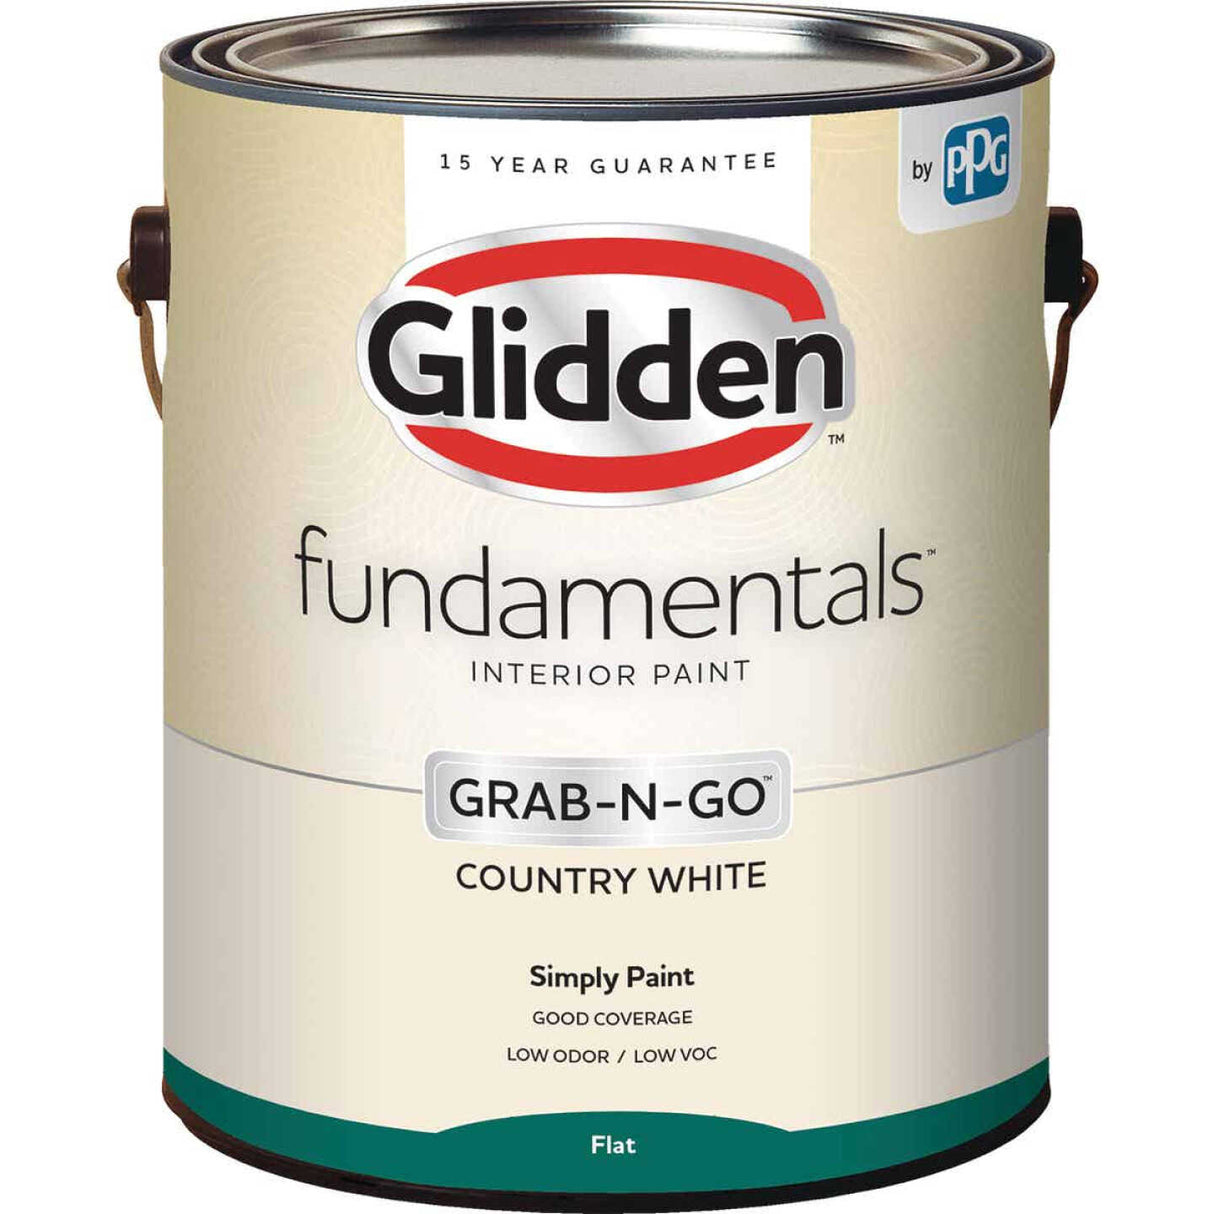 Glidden Fundamentals Grab-N-Go Country White Flat